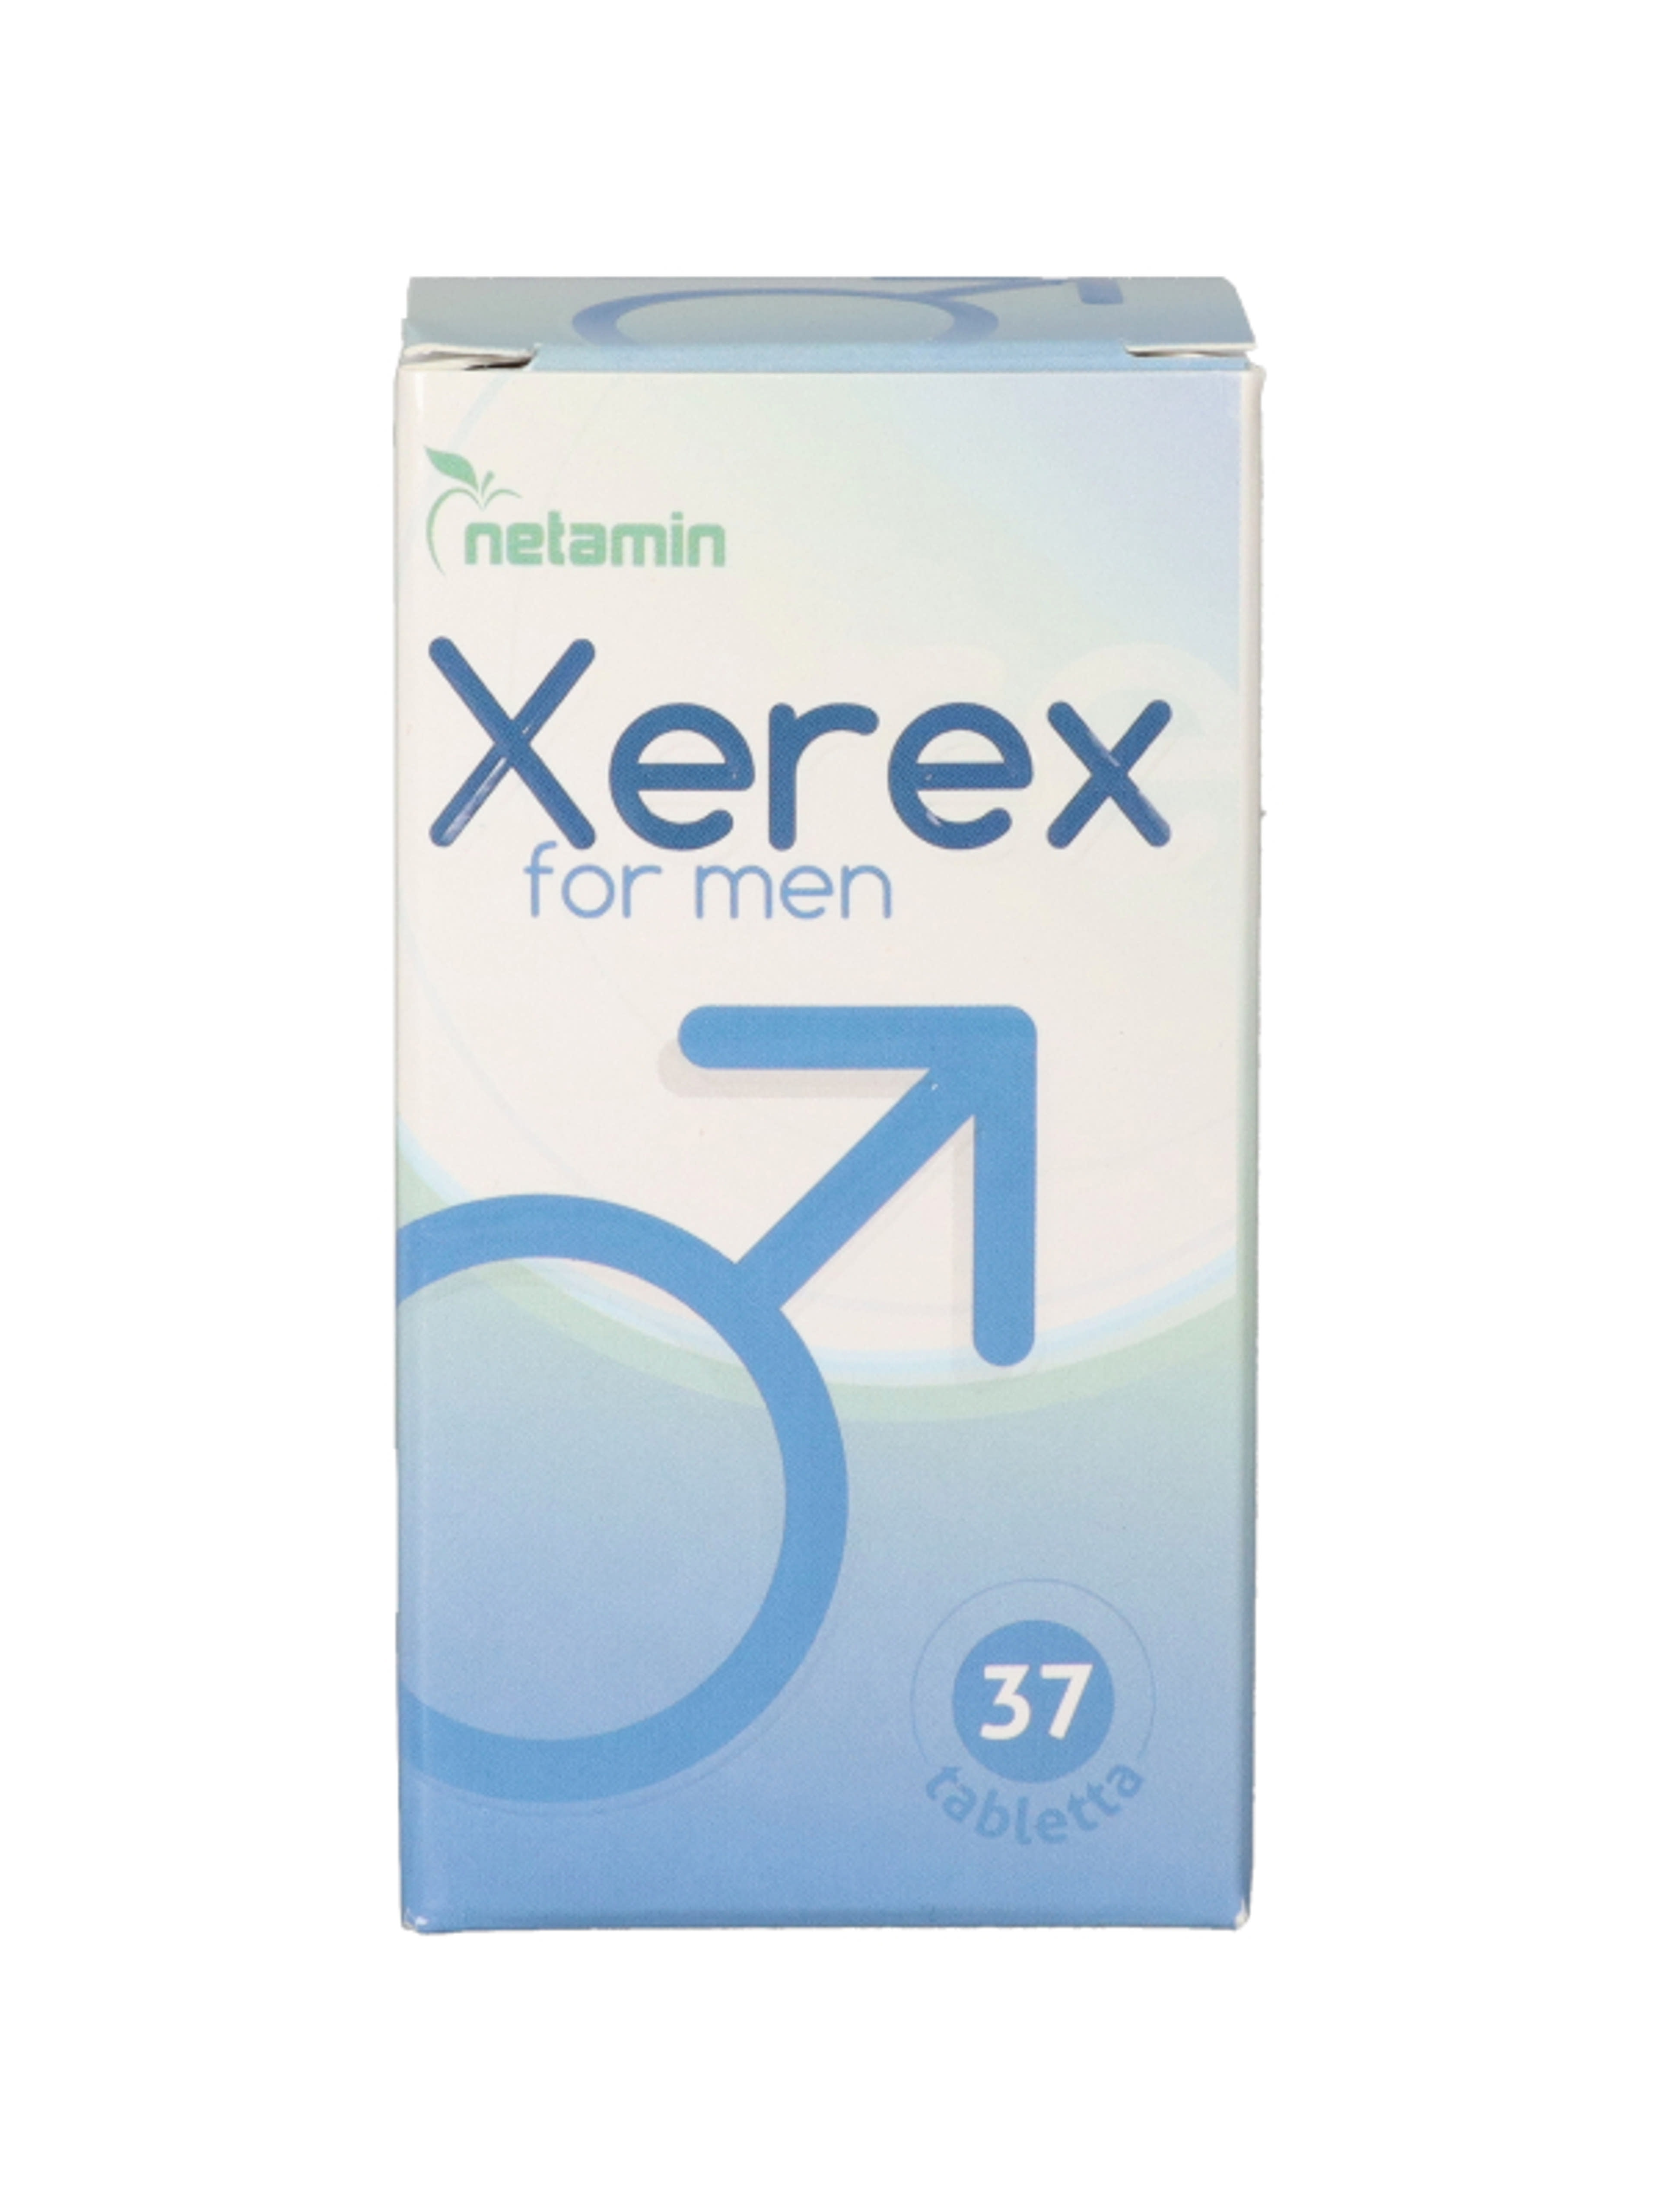 Netamin Xerex For Men potenciatabletta férfiaknak - 37 db-1